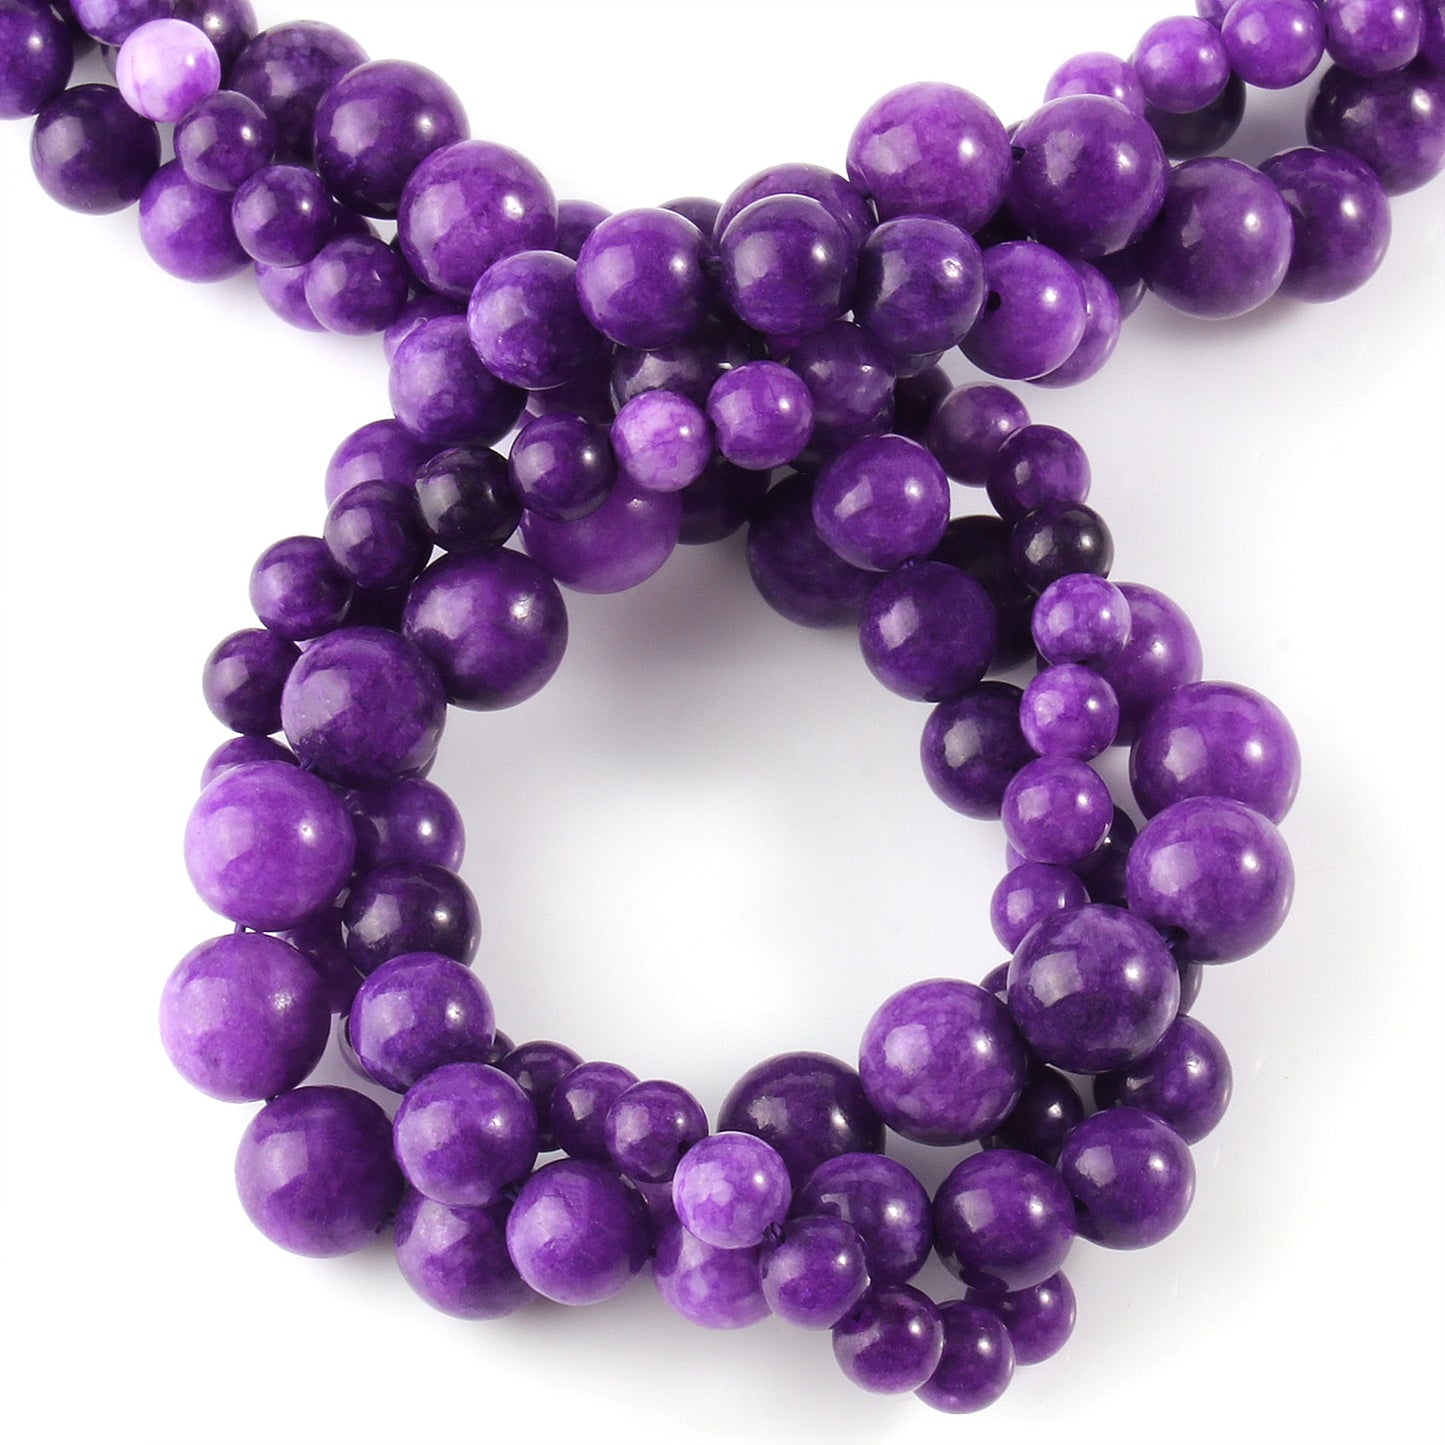 Stone Dark Purple Sugilite Jades Round Loose Beads